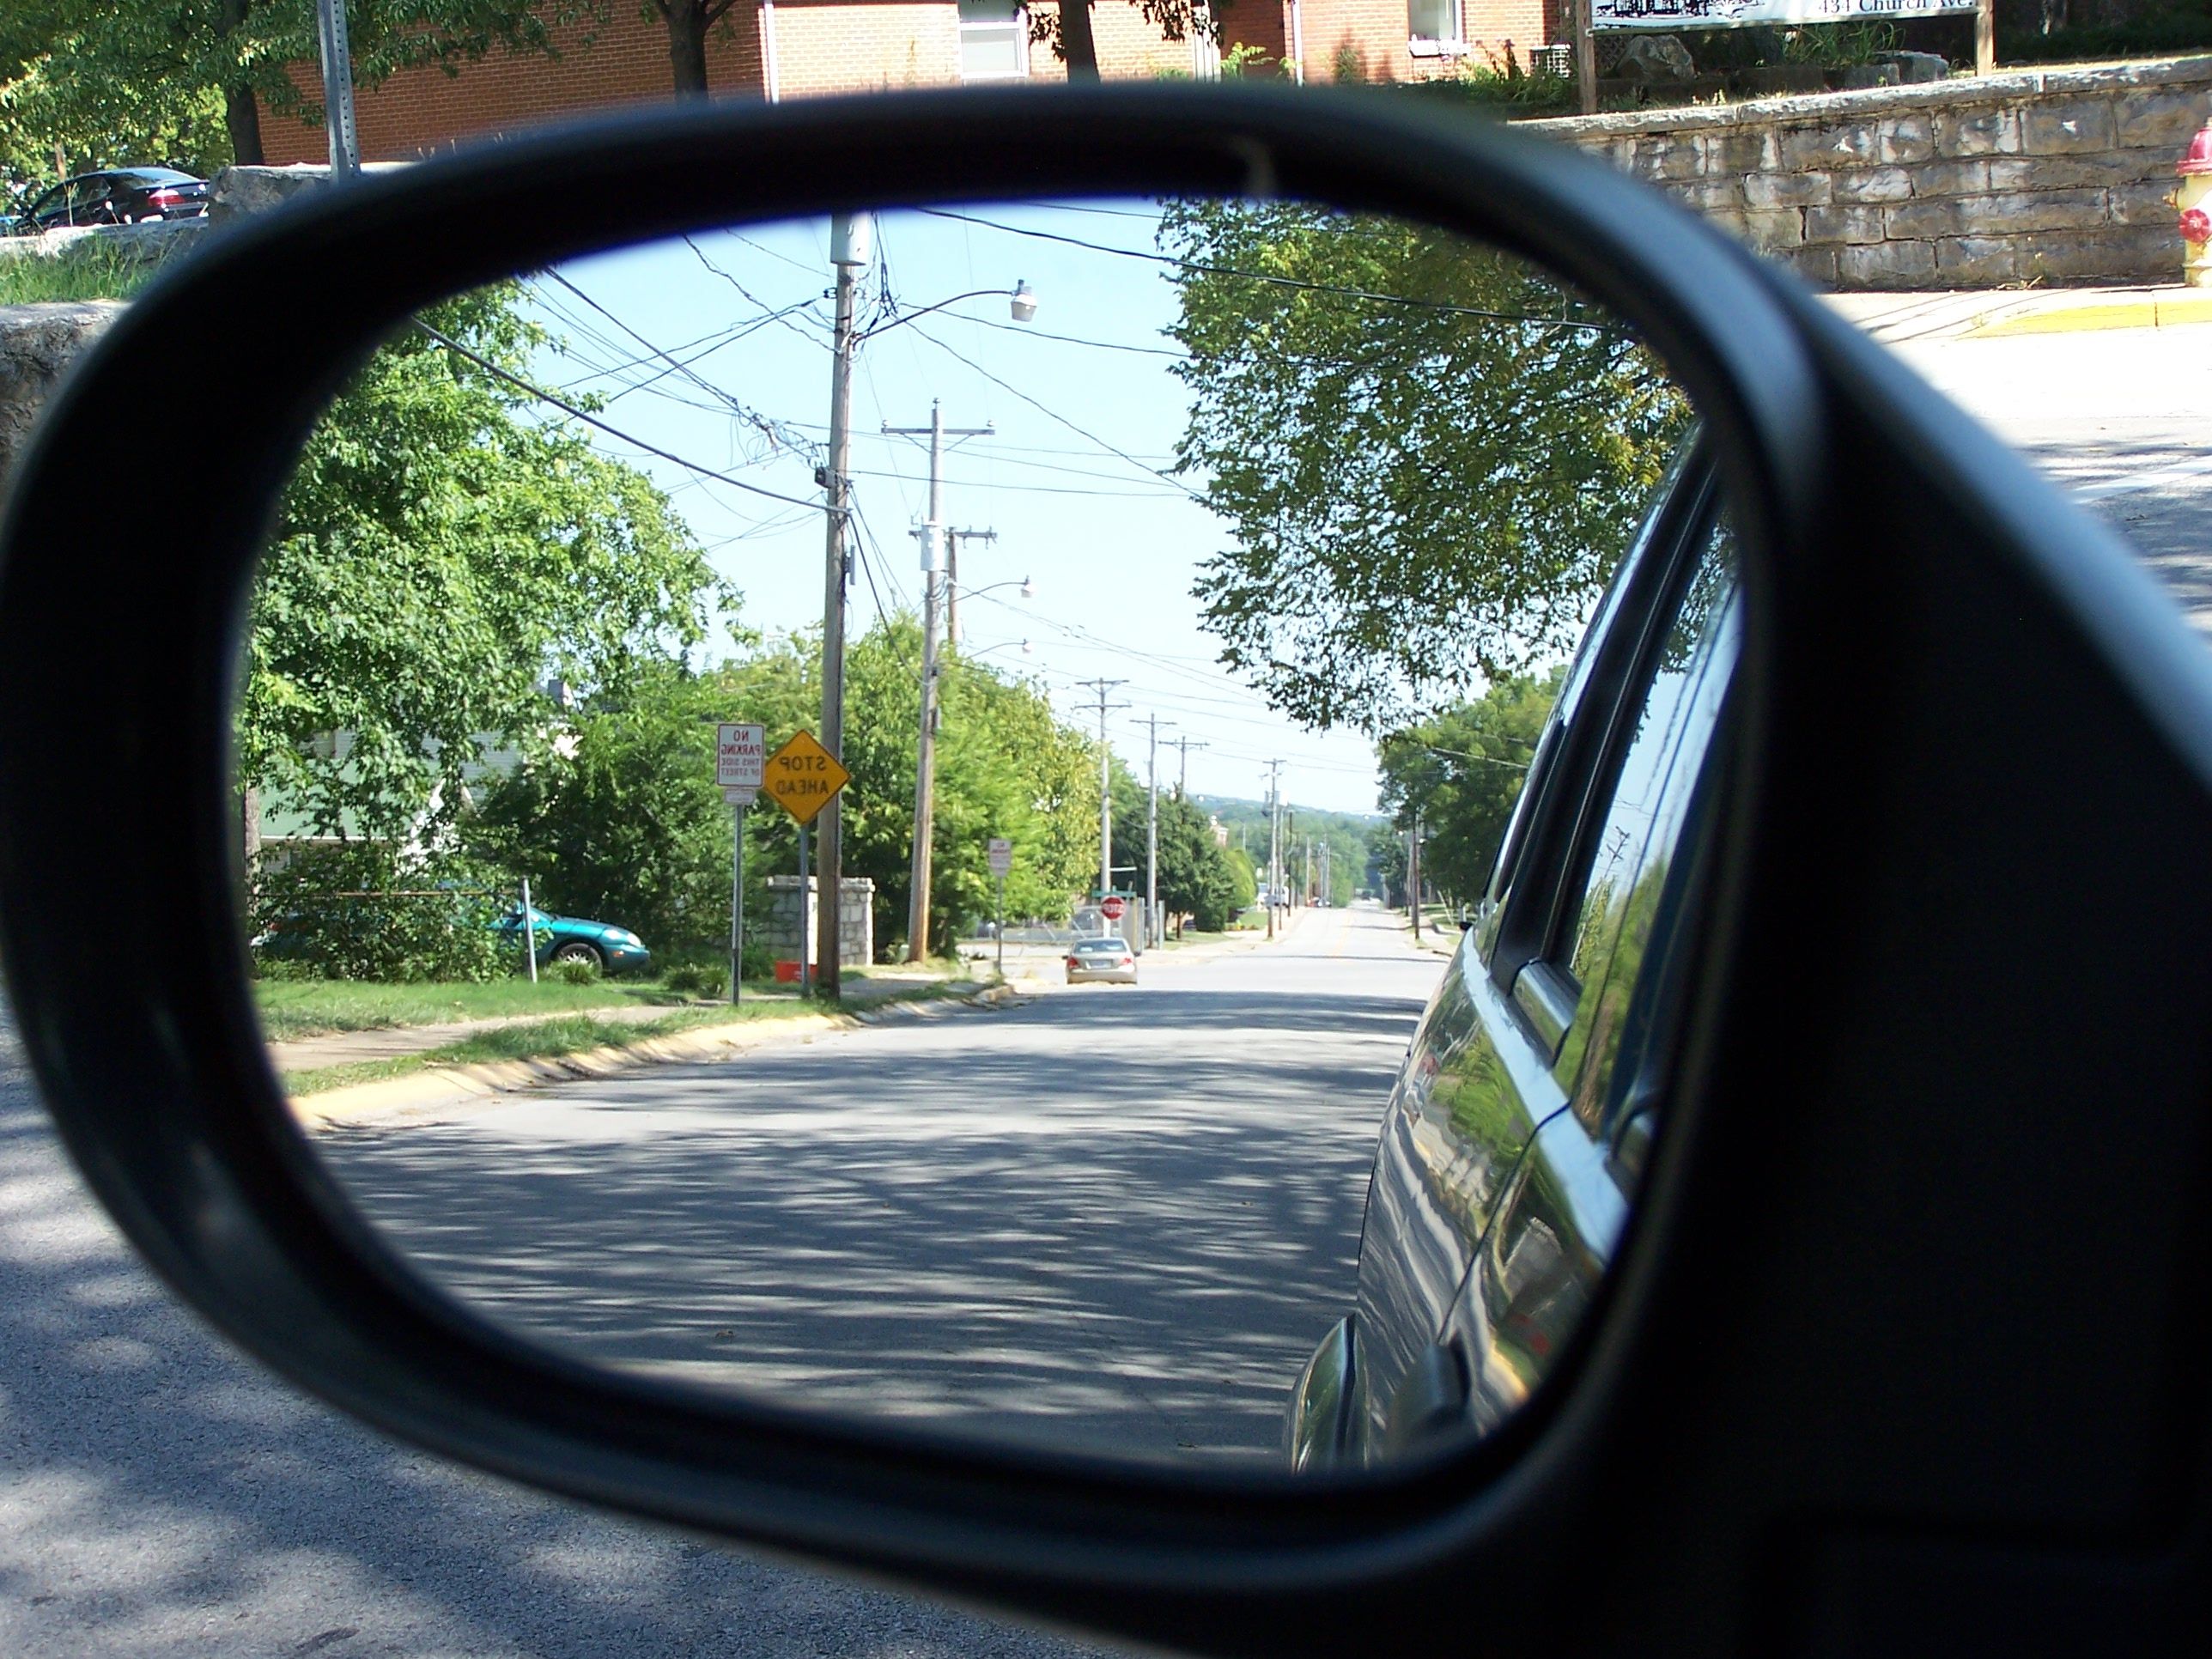 rear view mirror images - Google Search | Random Good Ideas ...